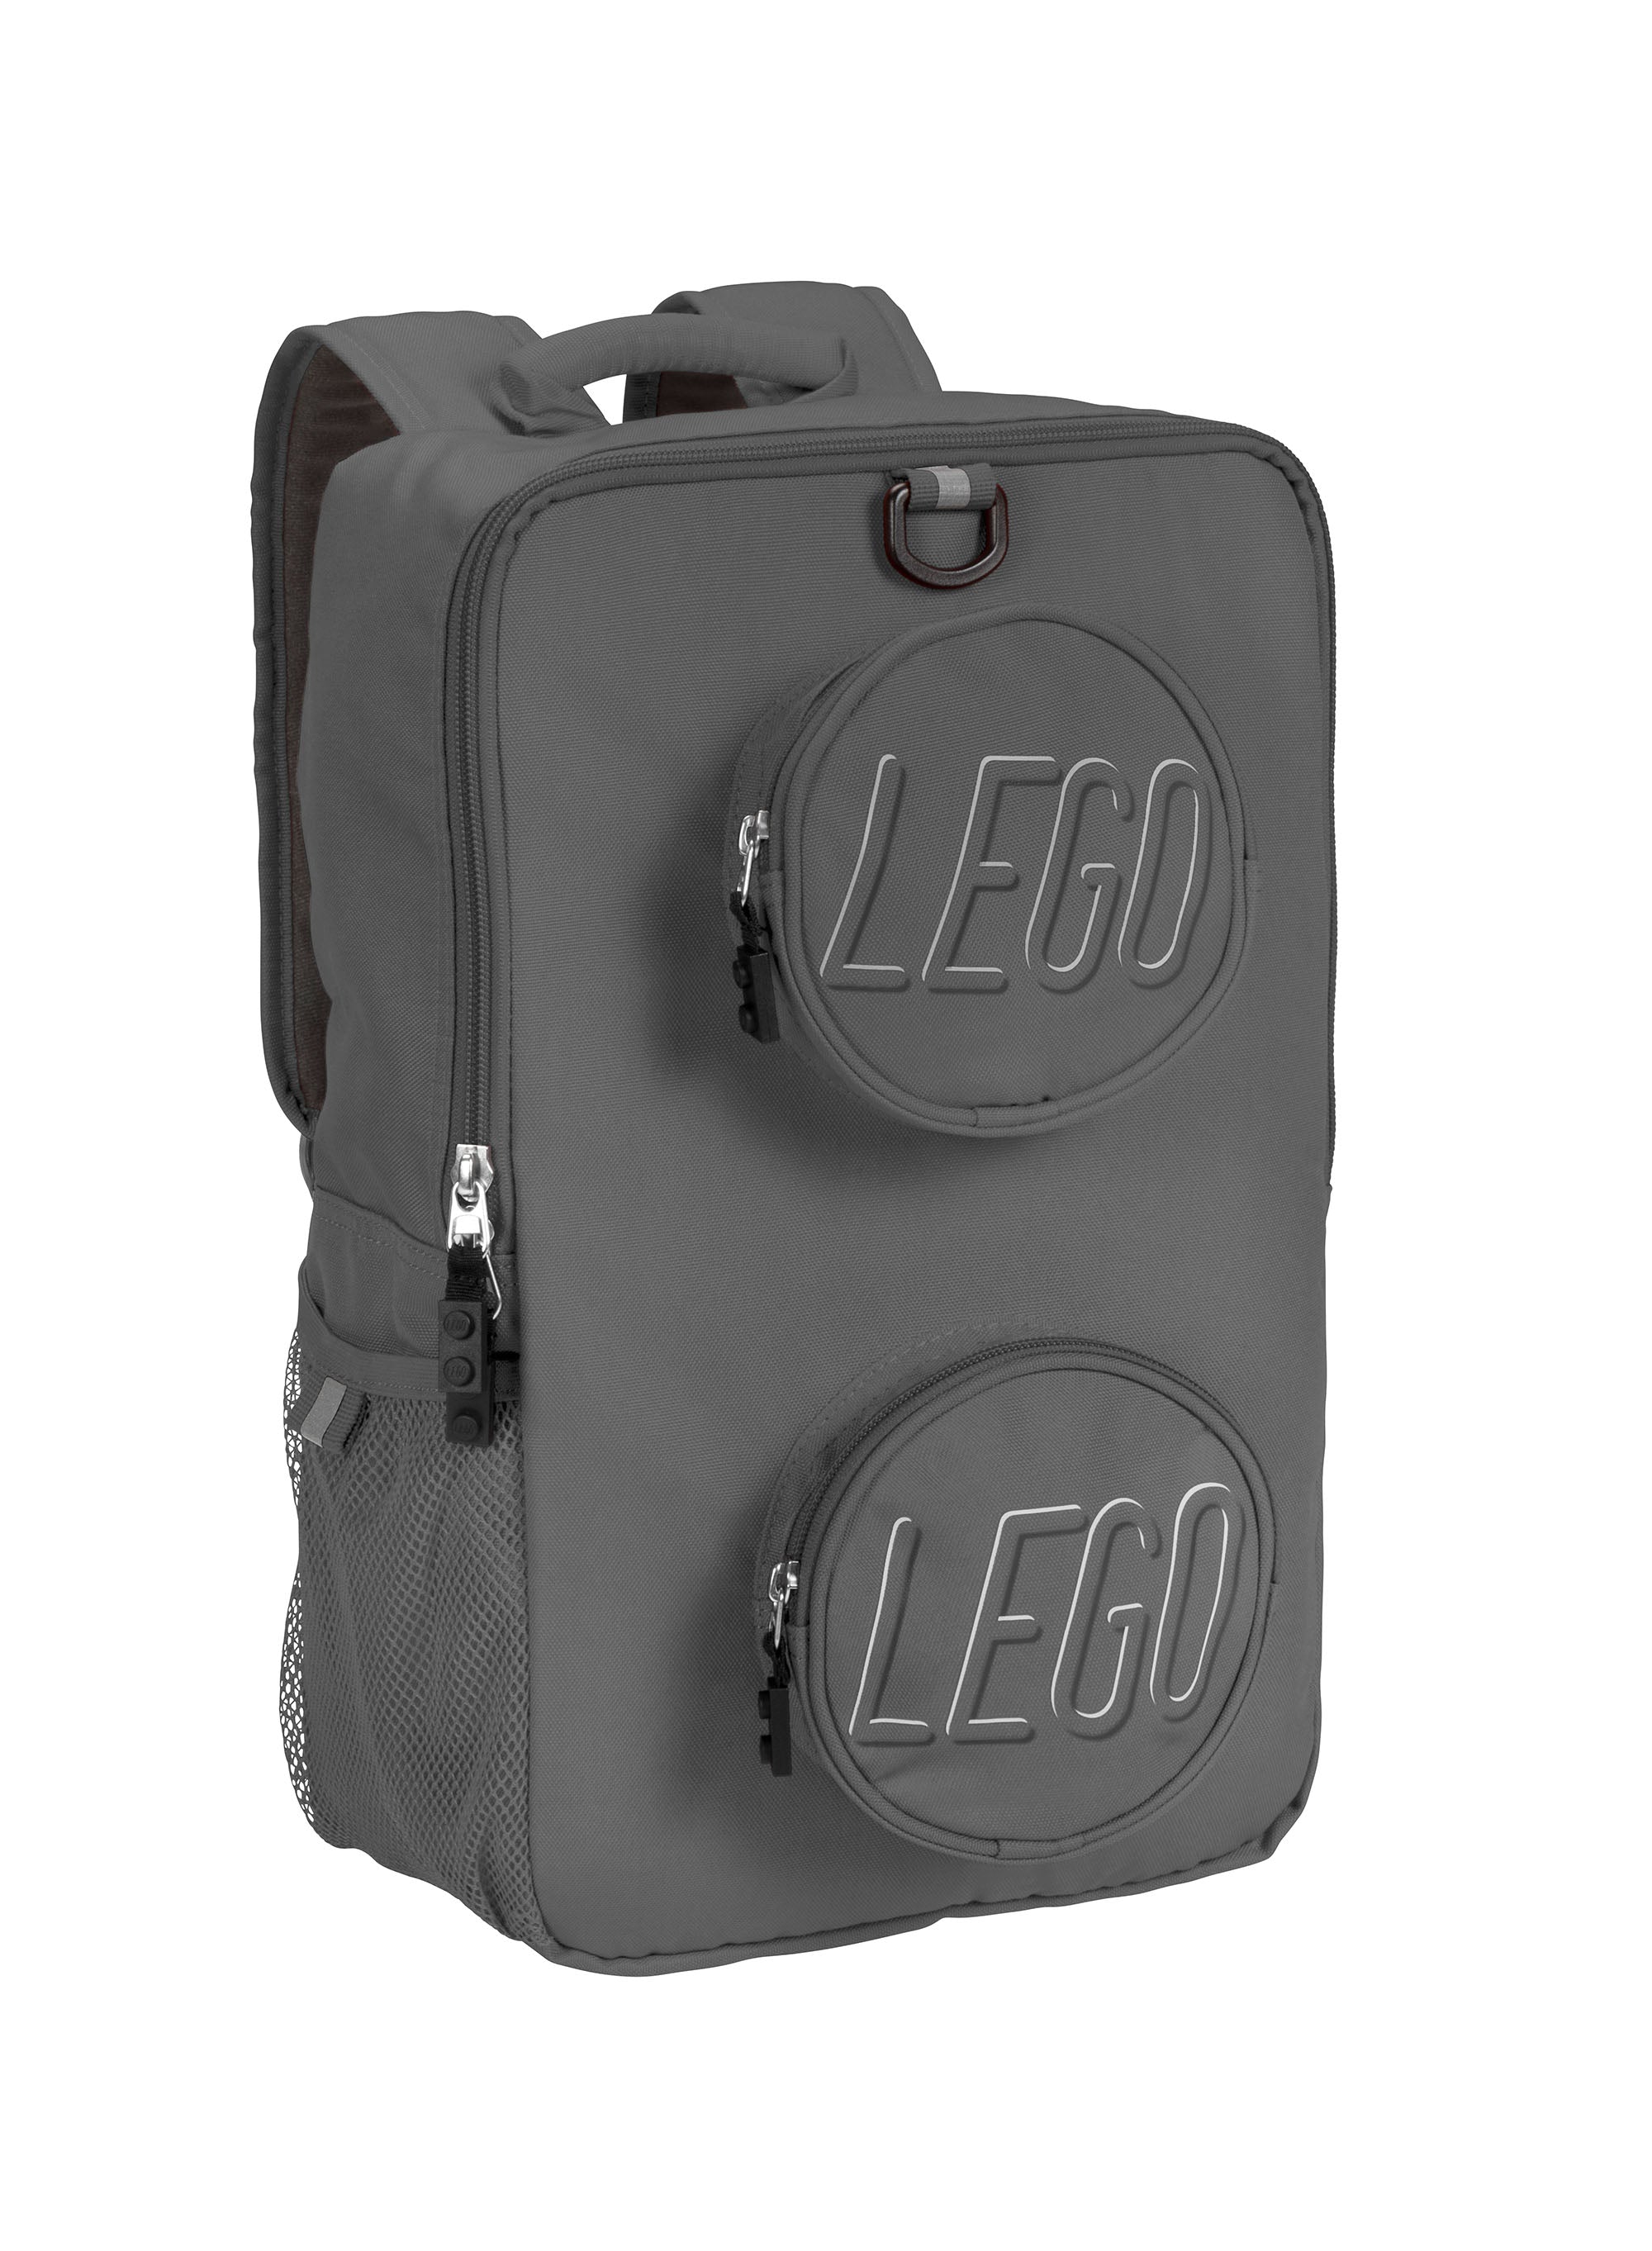 Rucsac LEGO Brick 2x2 Backpack 20205-0026 Black, UhfmrShops